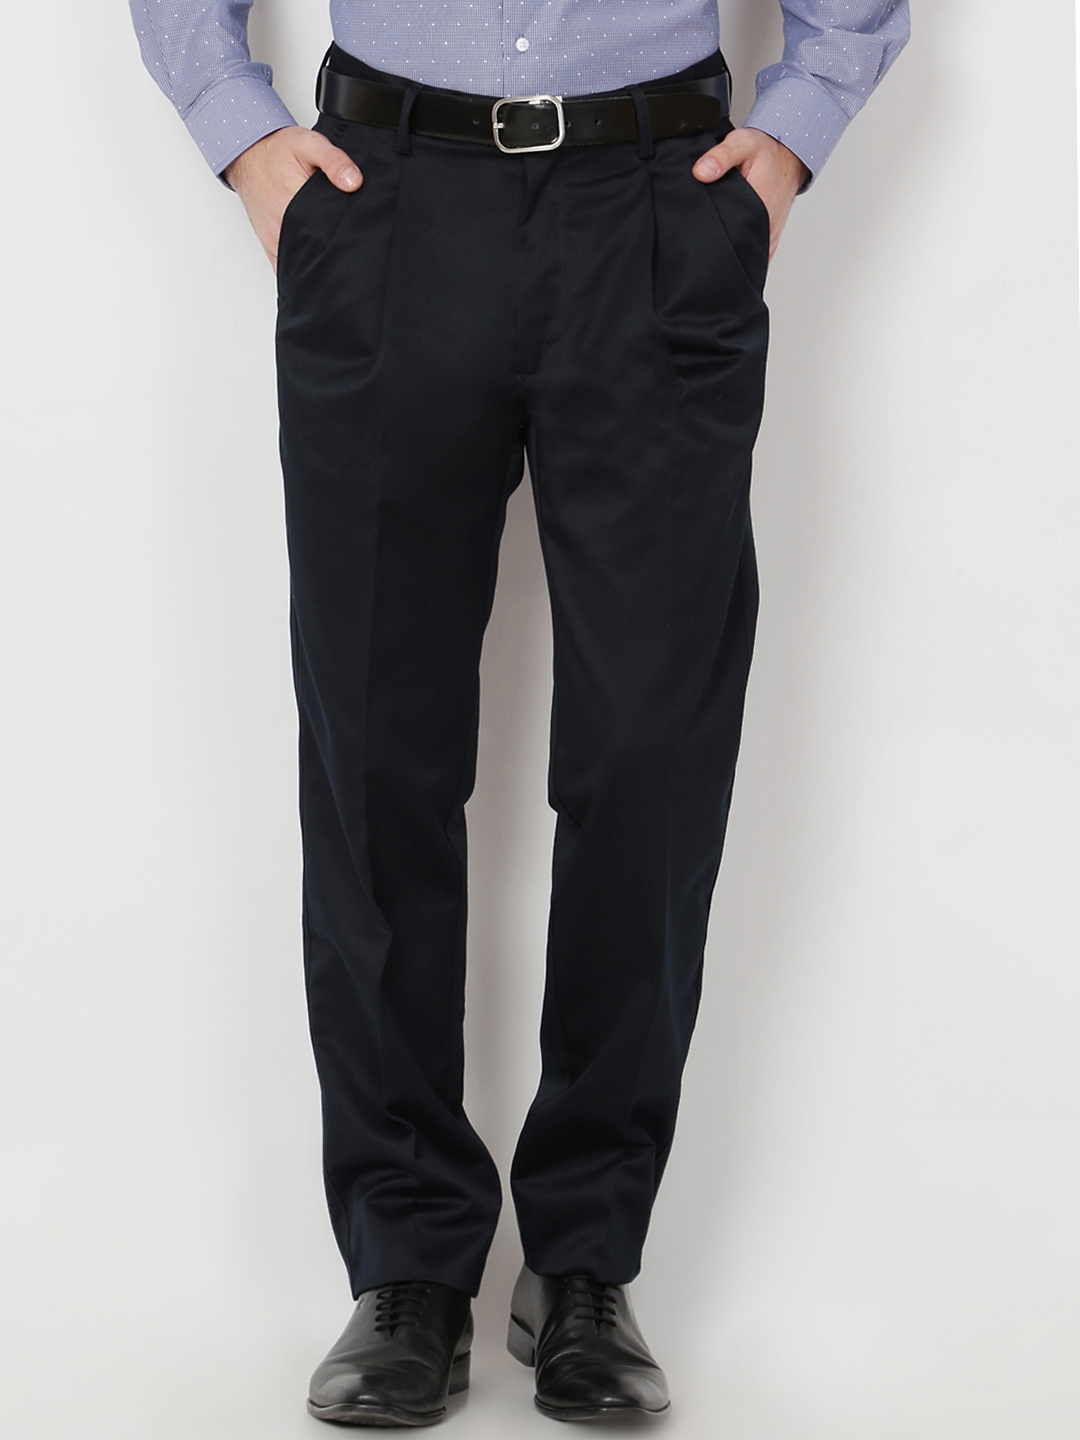 Buy Grey Trousers  Pants for Men by PETER ENGLAND Online  Ajiocom